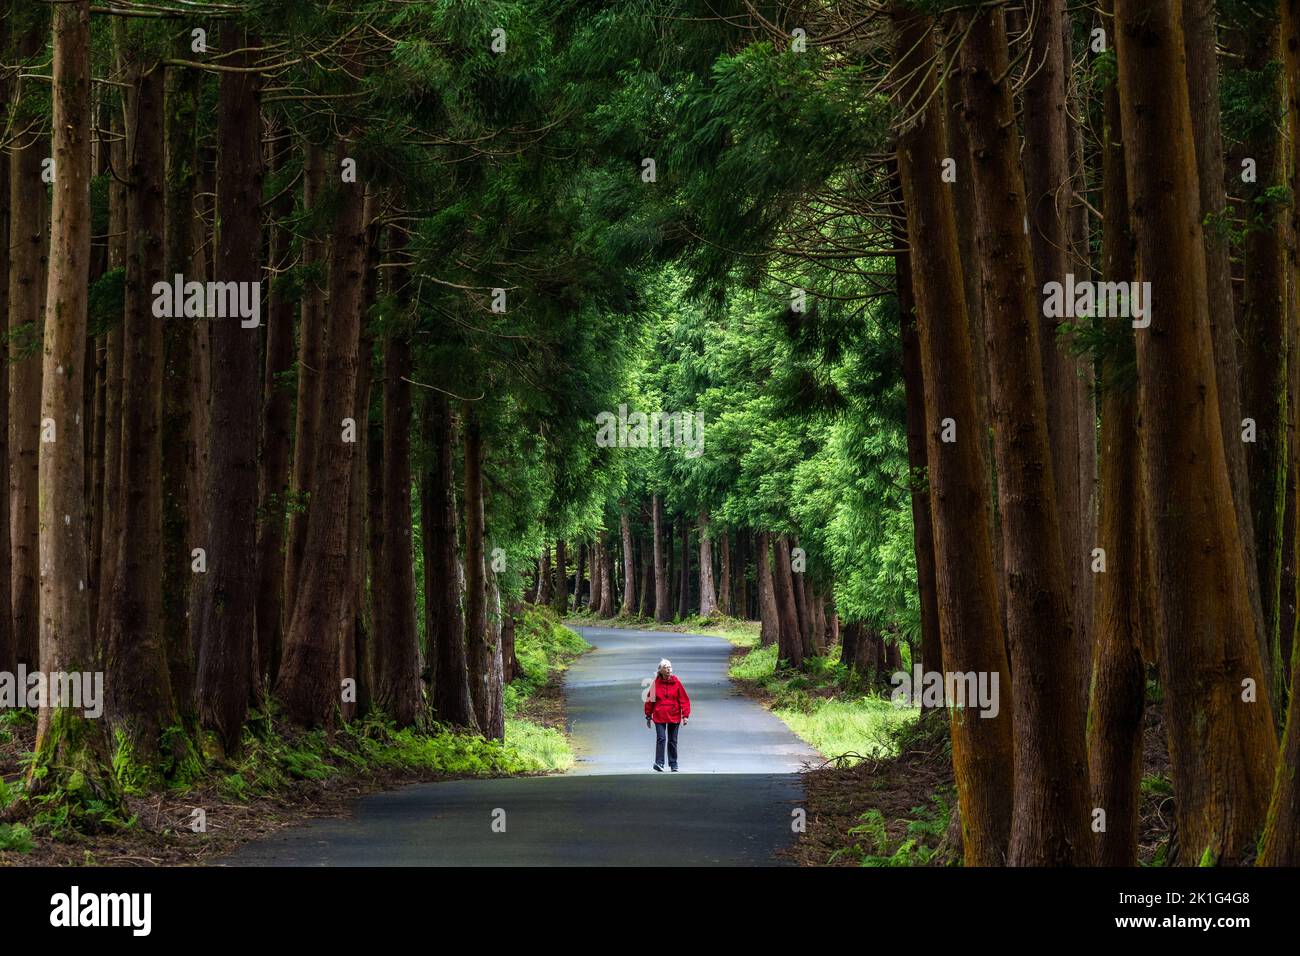 A woman walk past giant Japanese cedar trees in the Reserva Florestal Parcial da Serra de S. Barbara e dos Misterios Negros nature park in Terceira Island, Azores, Portugal. More than 22 percent of the land on Terceira Island is set aside as nature preserves. Stock Photo